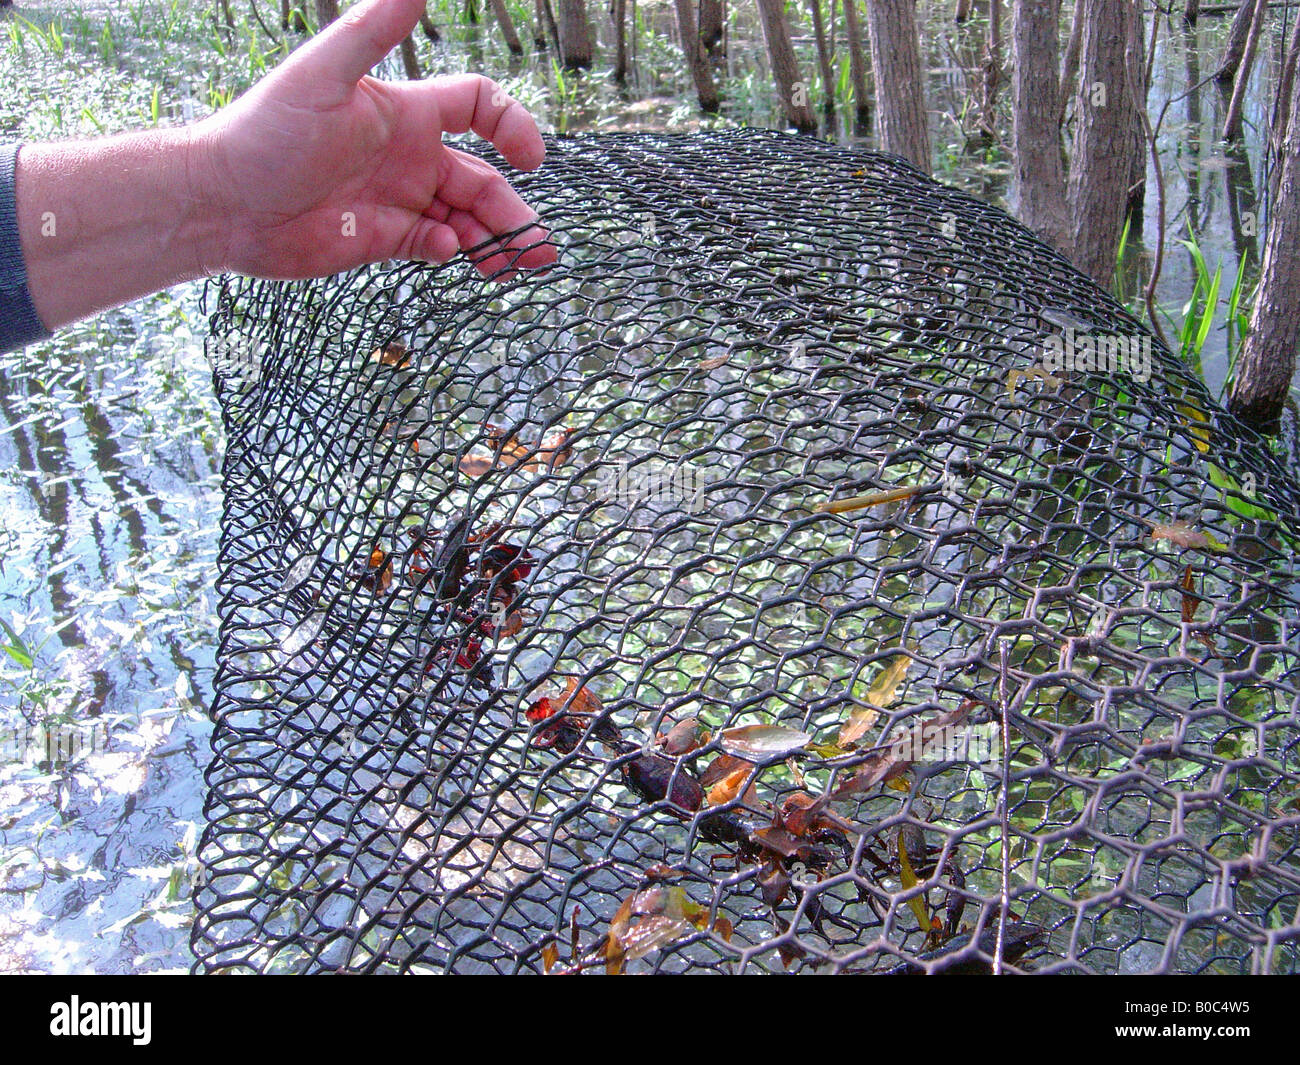 Crawfish louisiana net hi-res stock photography and images - Alamy